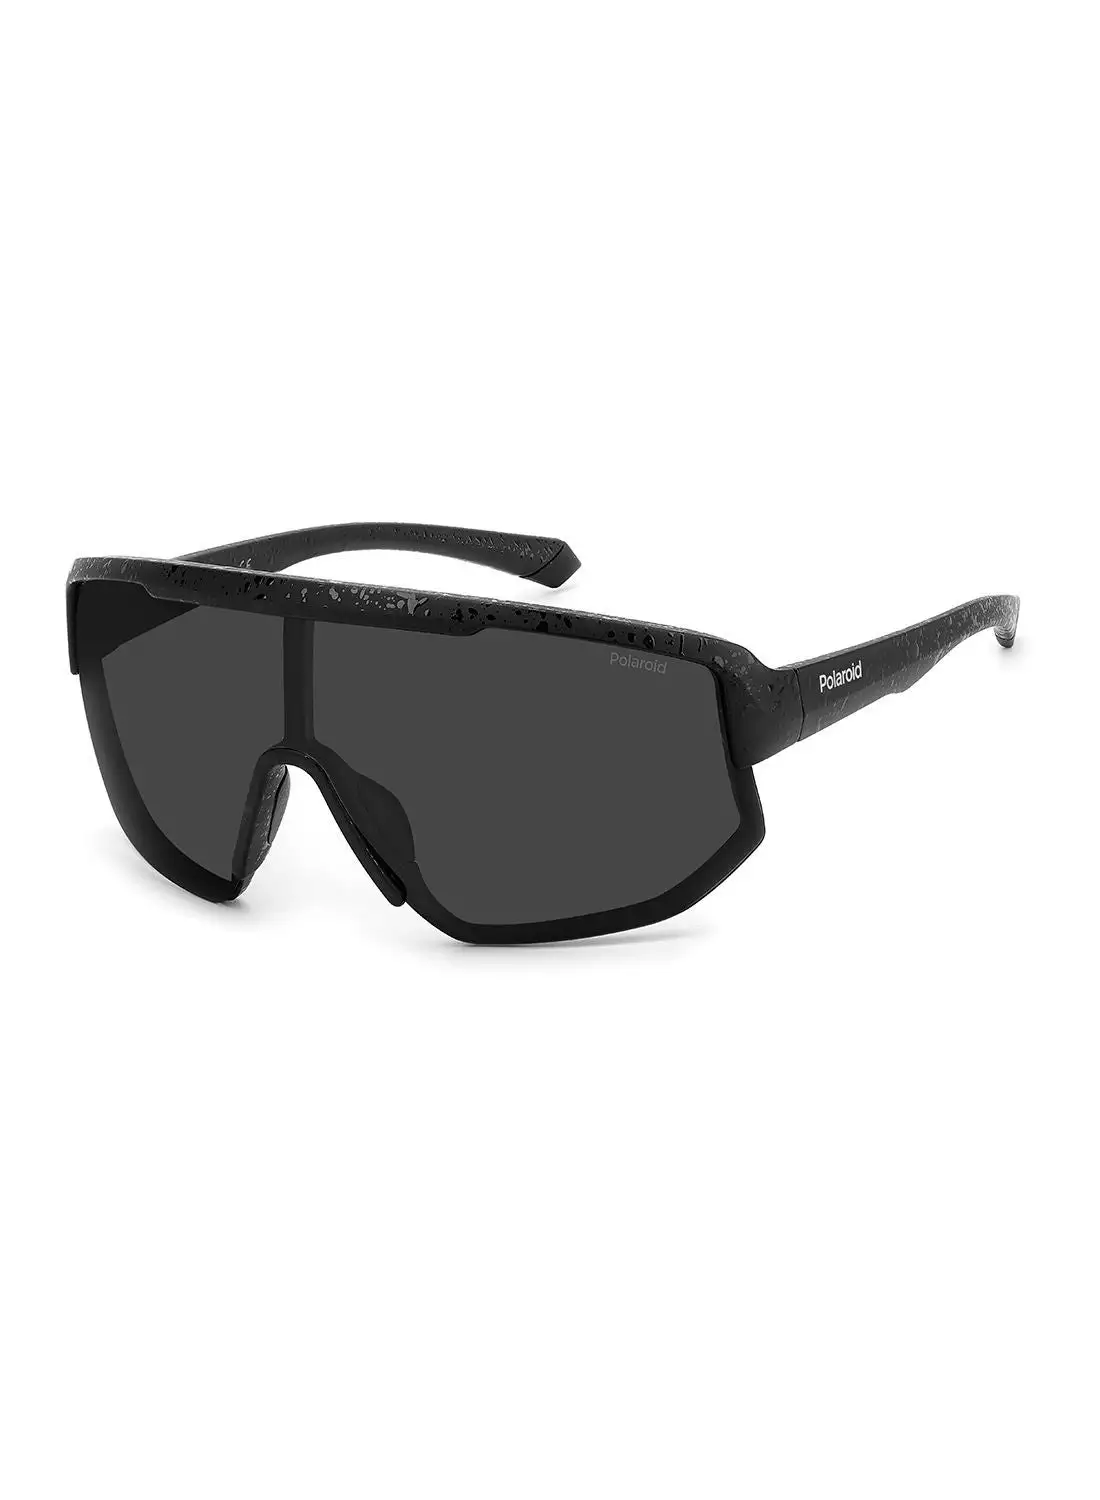 Polaroid Unisex UV Protection Sunglasses - Pld 7047/S Mtt Black 99 - Lens Size: 99 Mm